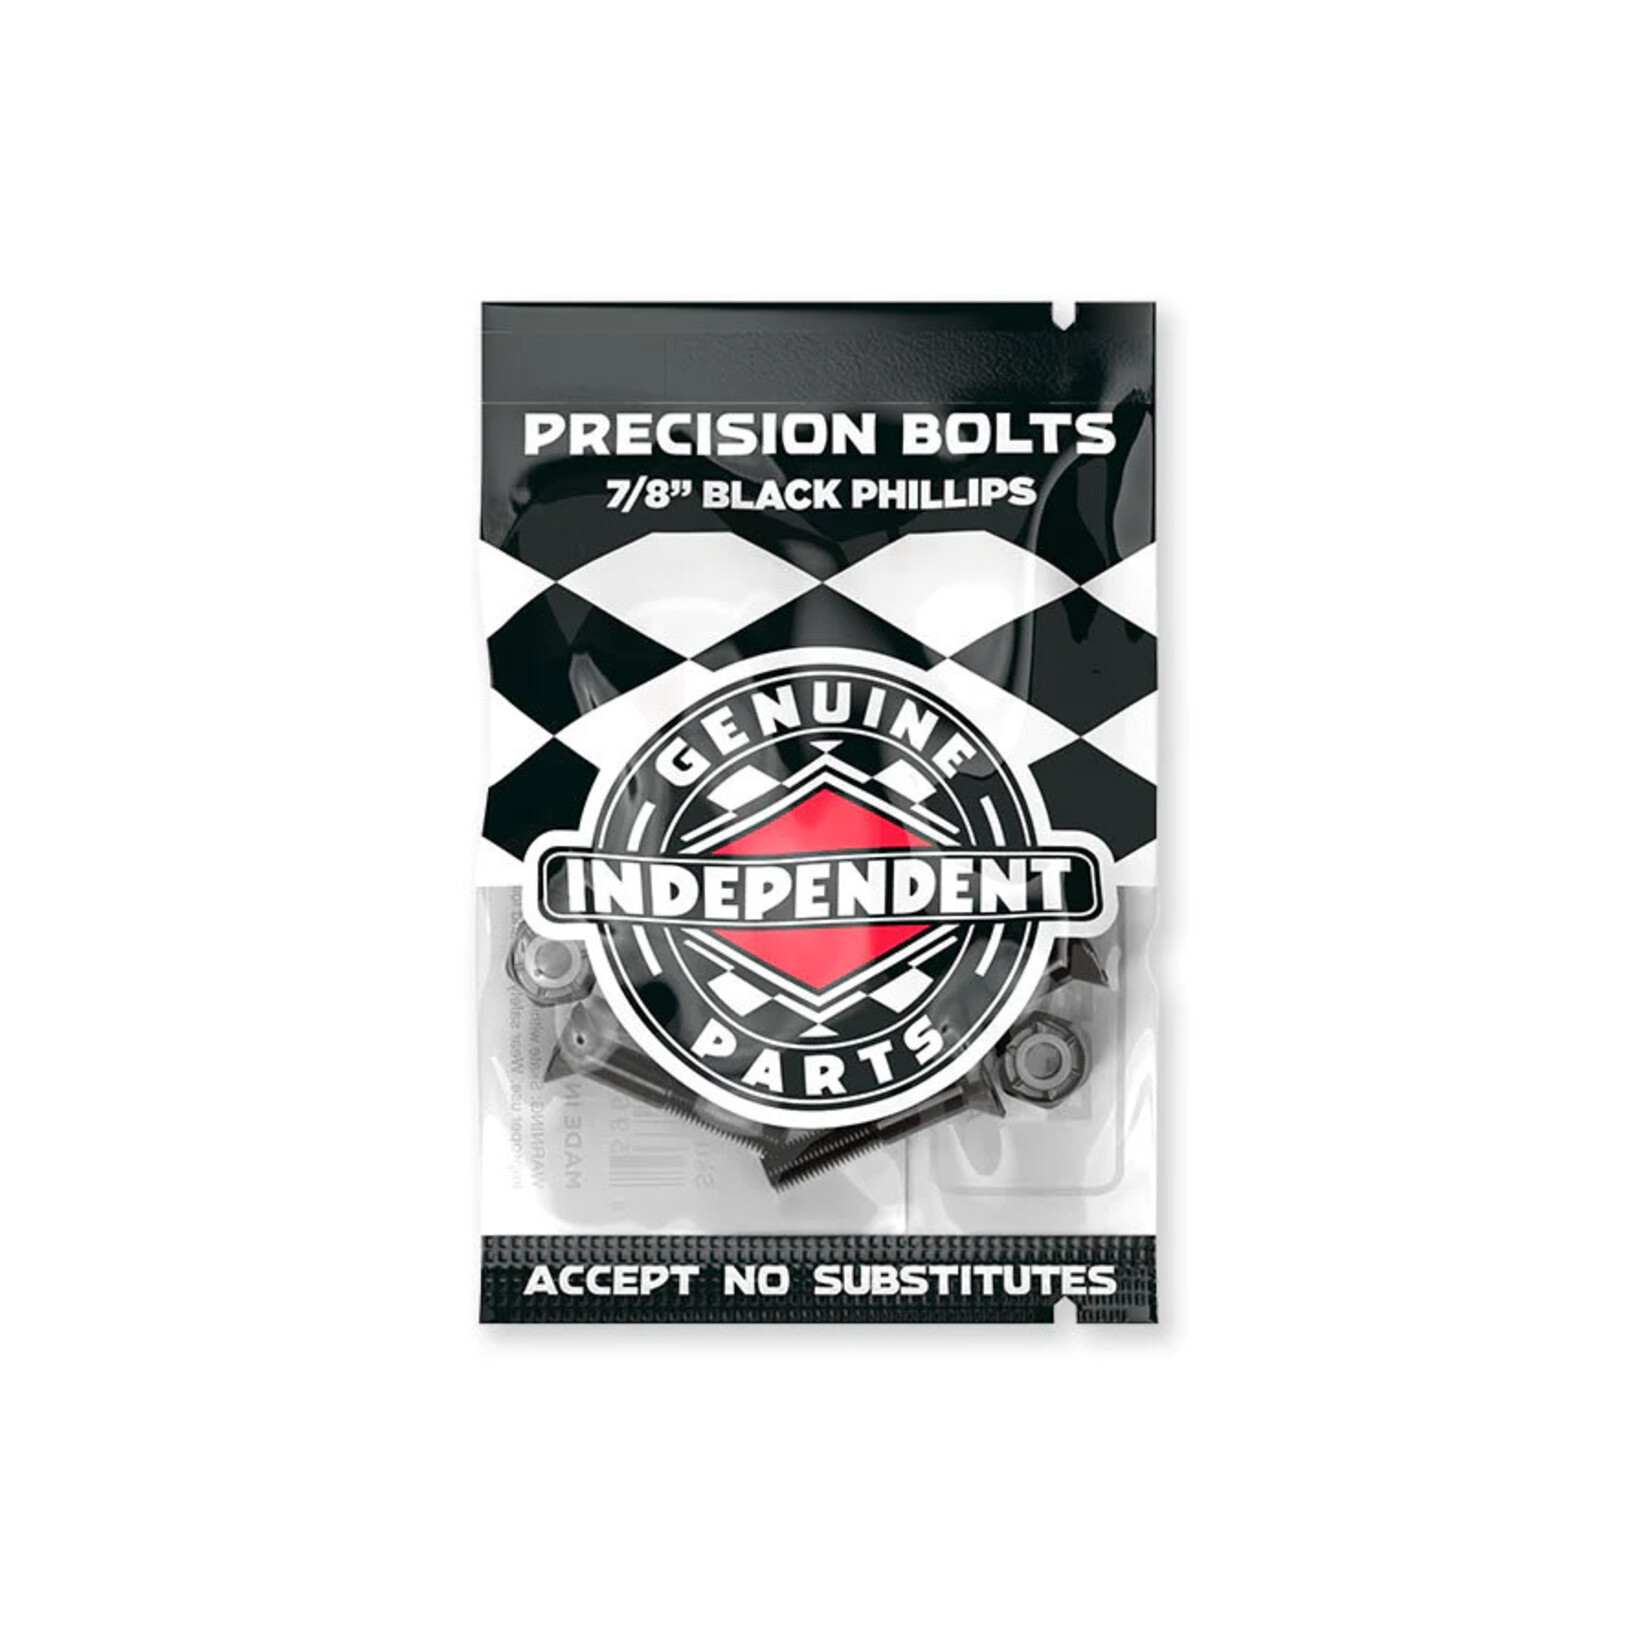 Independent Independent Precision Bolts 7/8" Phillips Hardware - Black